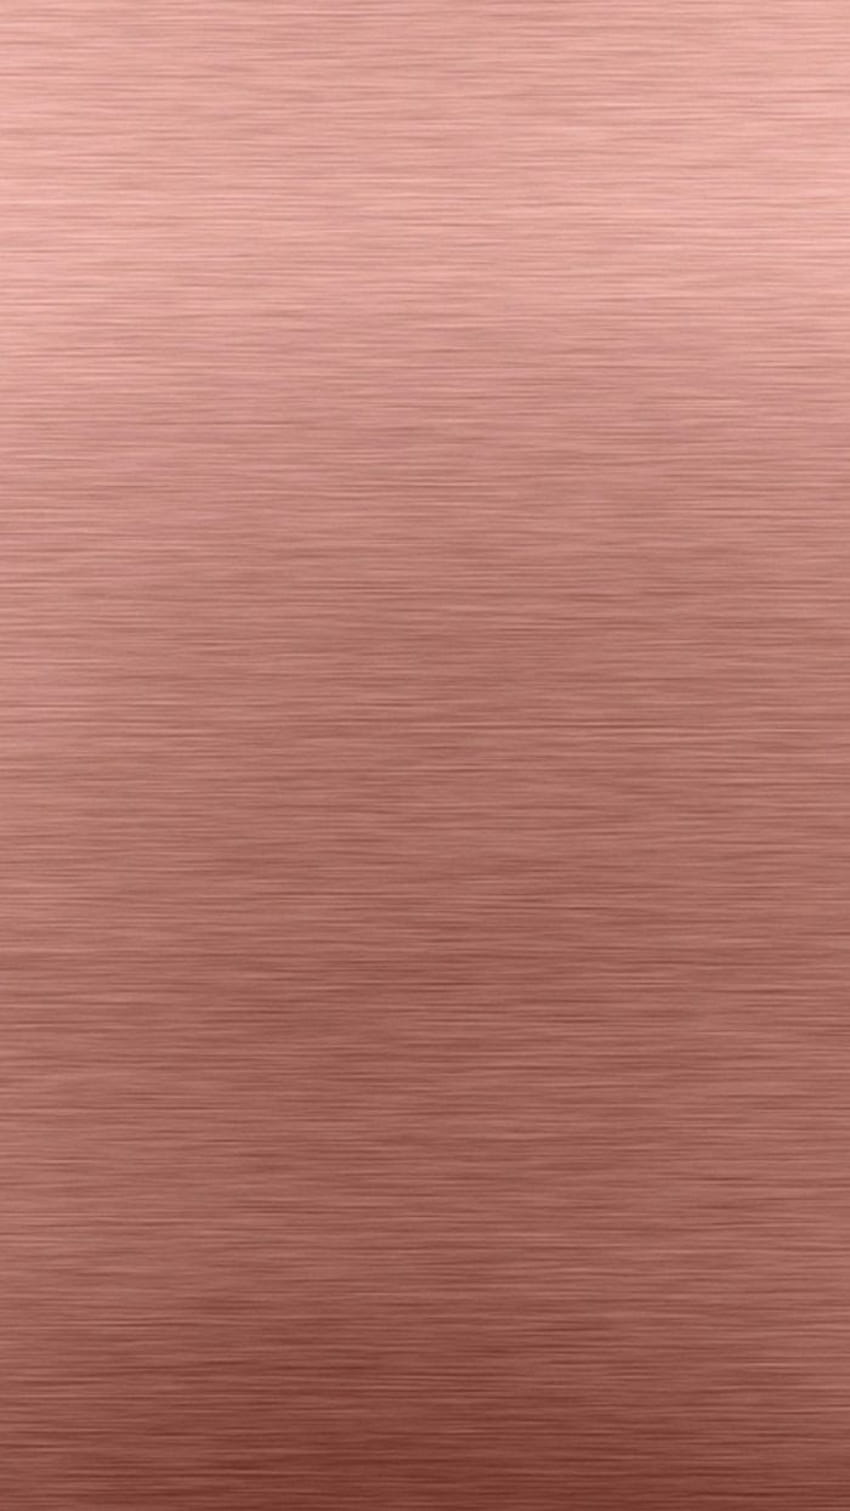 Android Mawar Emas Resolusi Tinggi 1080X1920. Planos de fundo, Fundus cor solida, Papel de parede cor de rosa, Rose Gold Metallic wallpaper ponsel HD